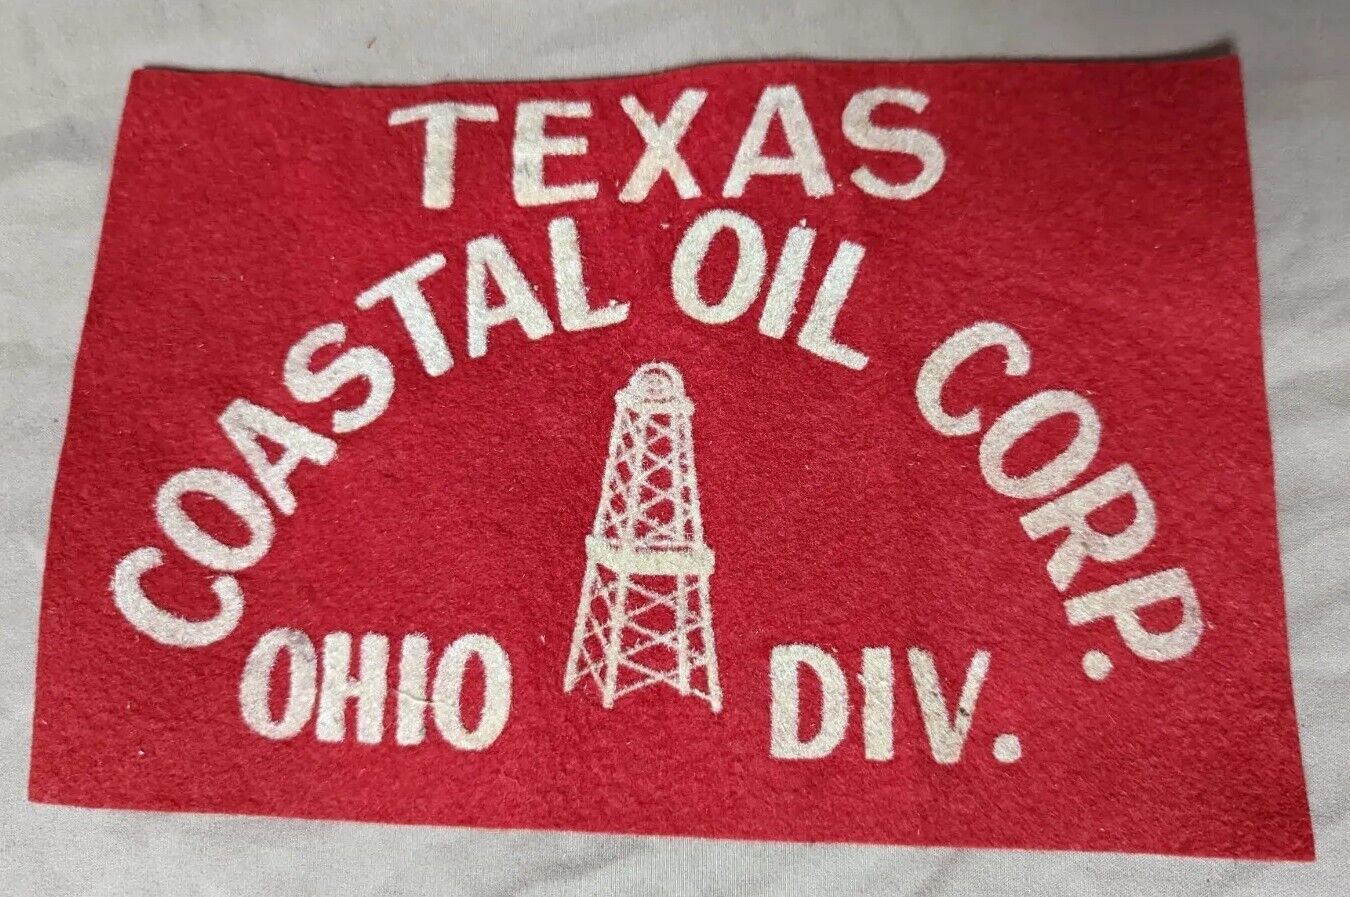 Vintage Texas Costal Oil Corp Ohio Div. Red Felt Large 6X9\